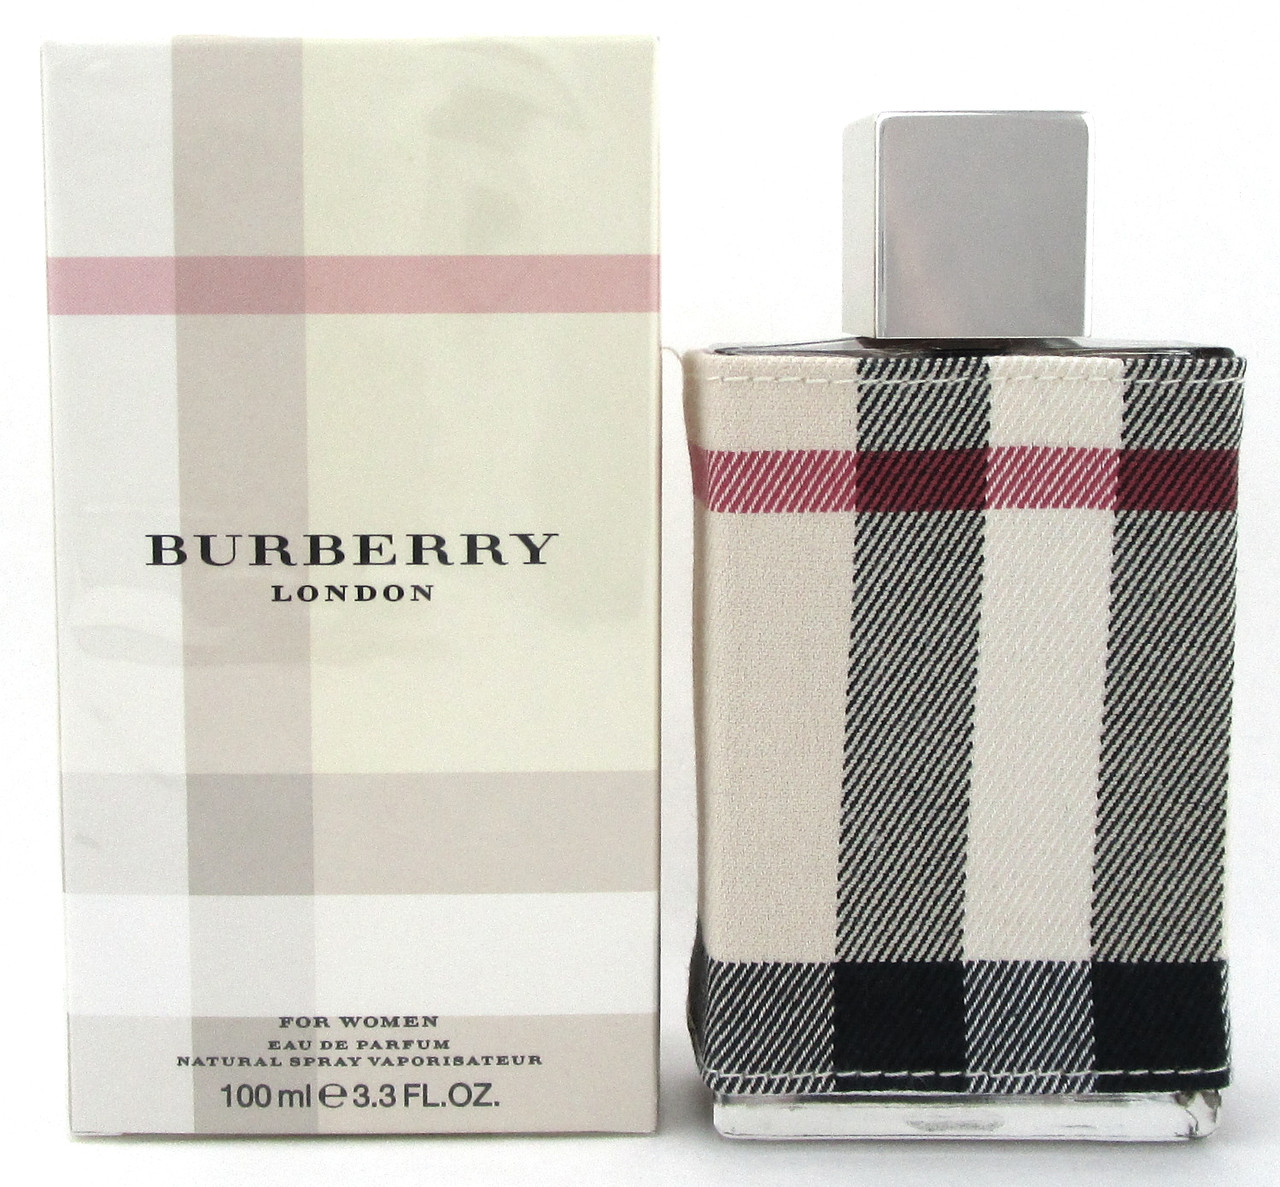 Burberry London Perfume for Women 3.3 oz. EDP Spray. New Packing